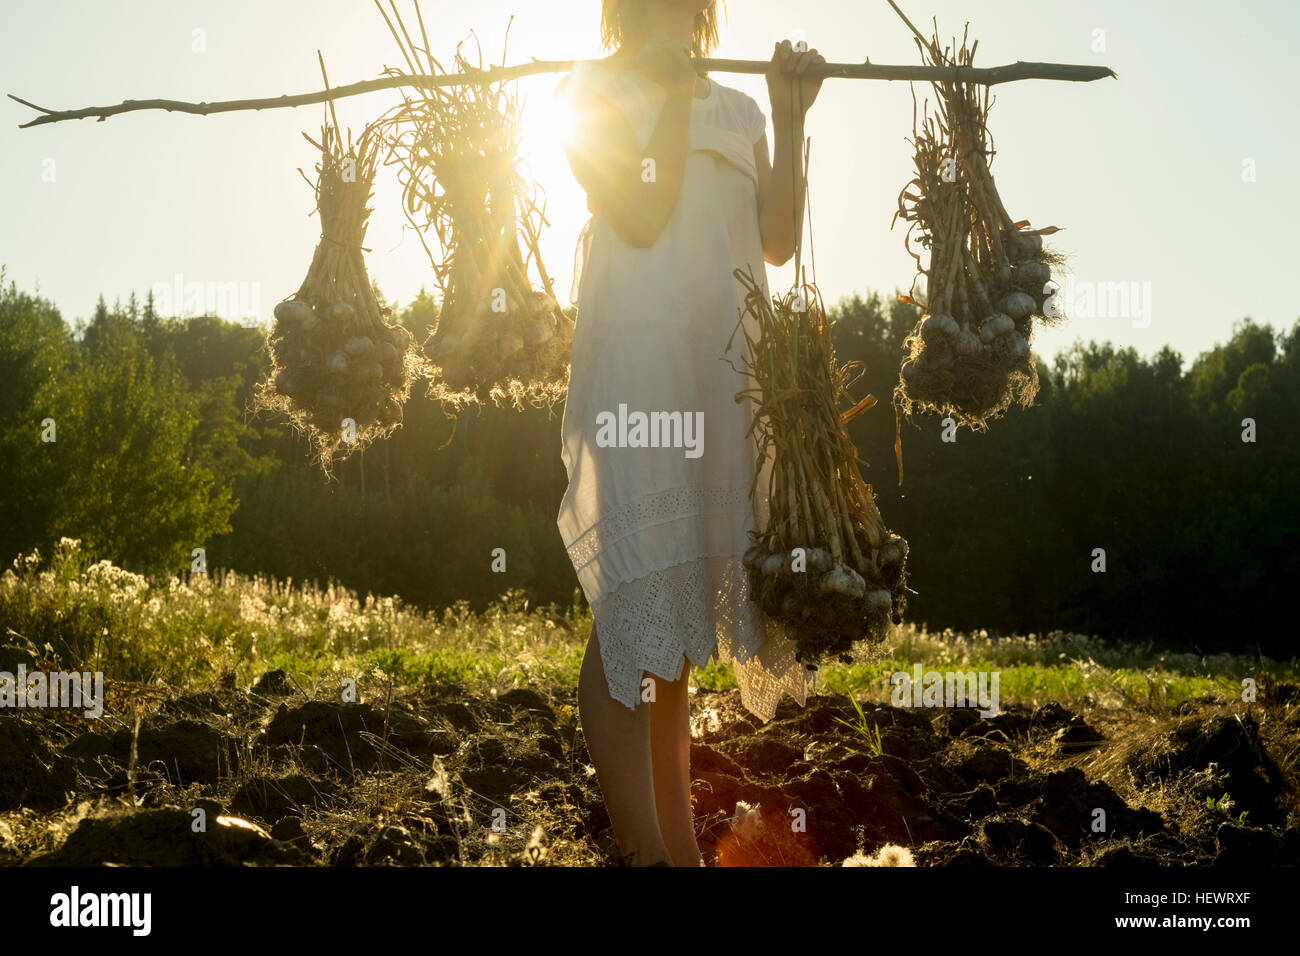 Woman in field harvesting garlic, Ural, Russia Stock Photo